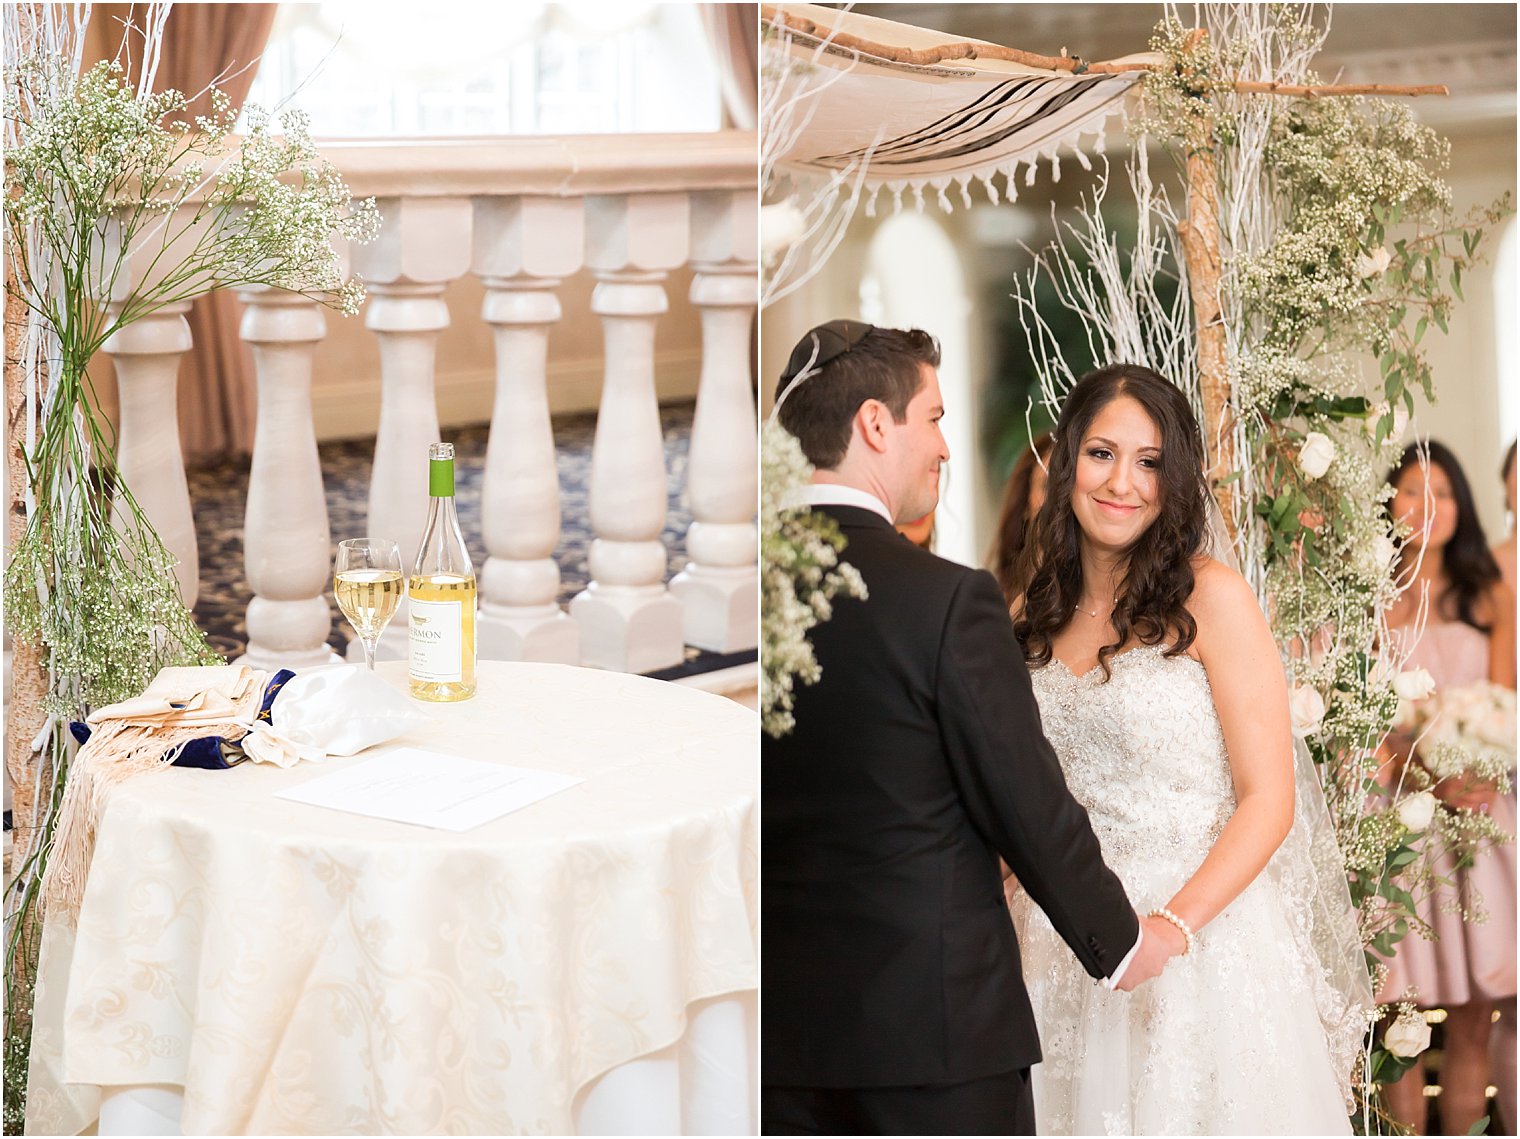 Jewish wedding ceremony details | Photo by Idalia Photography